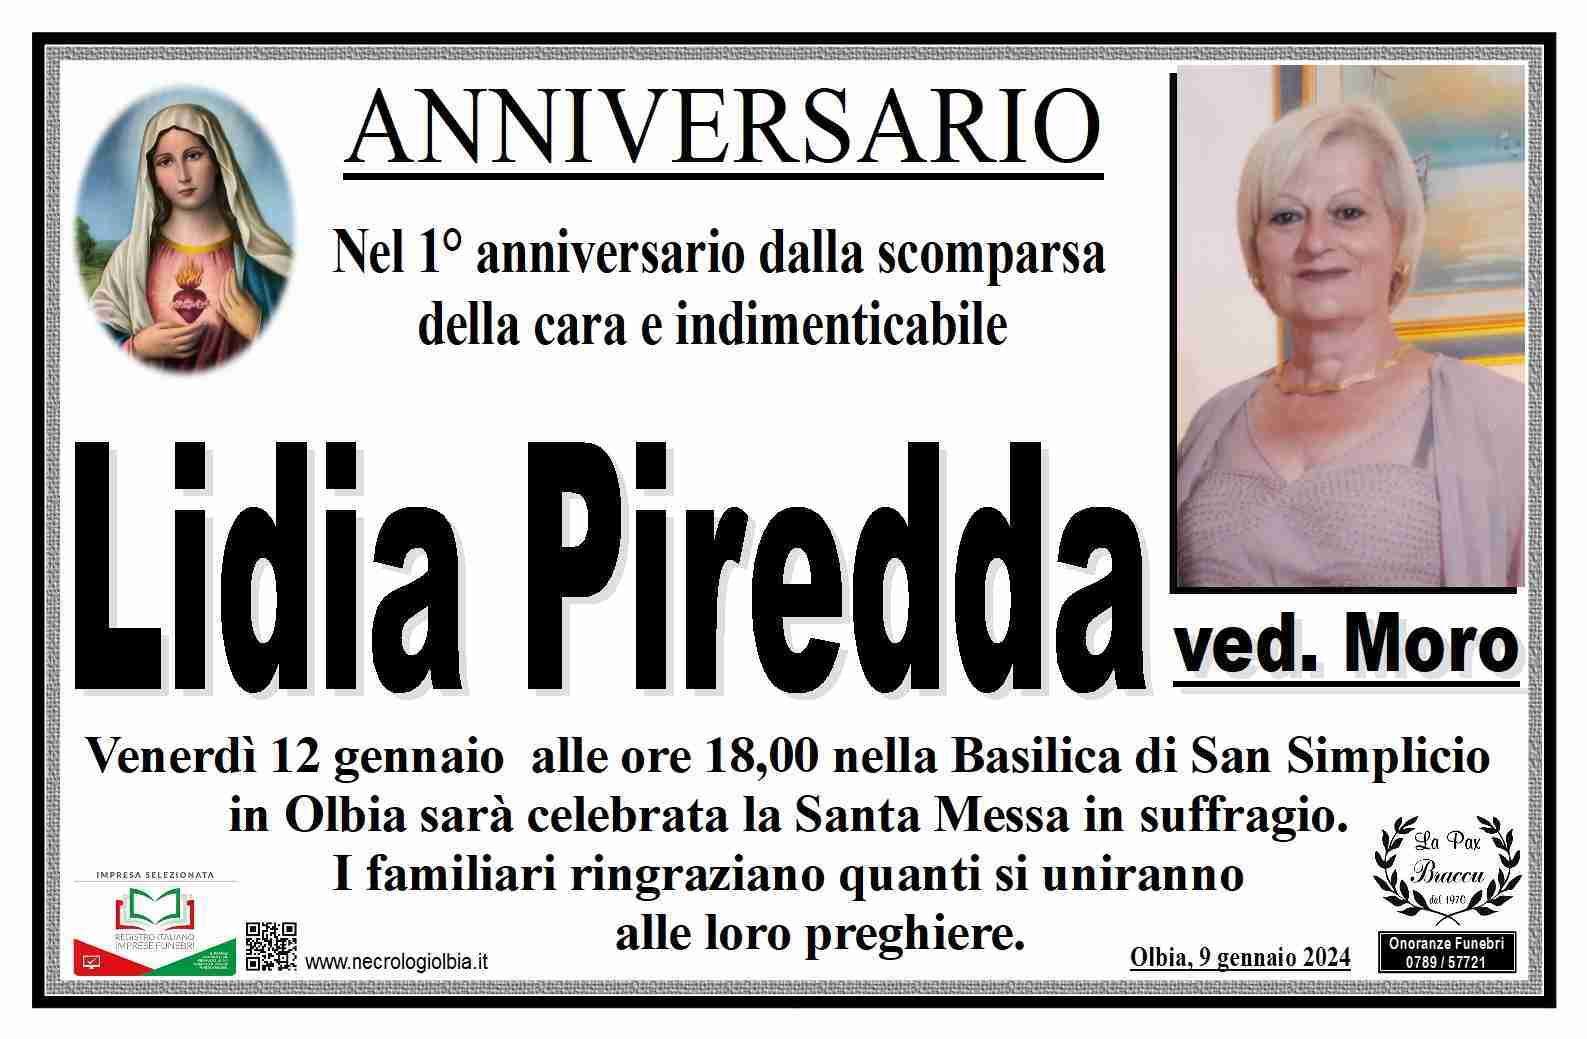 Lidia Piredda